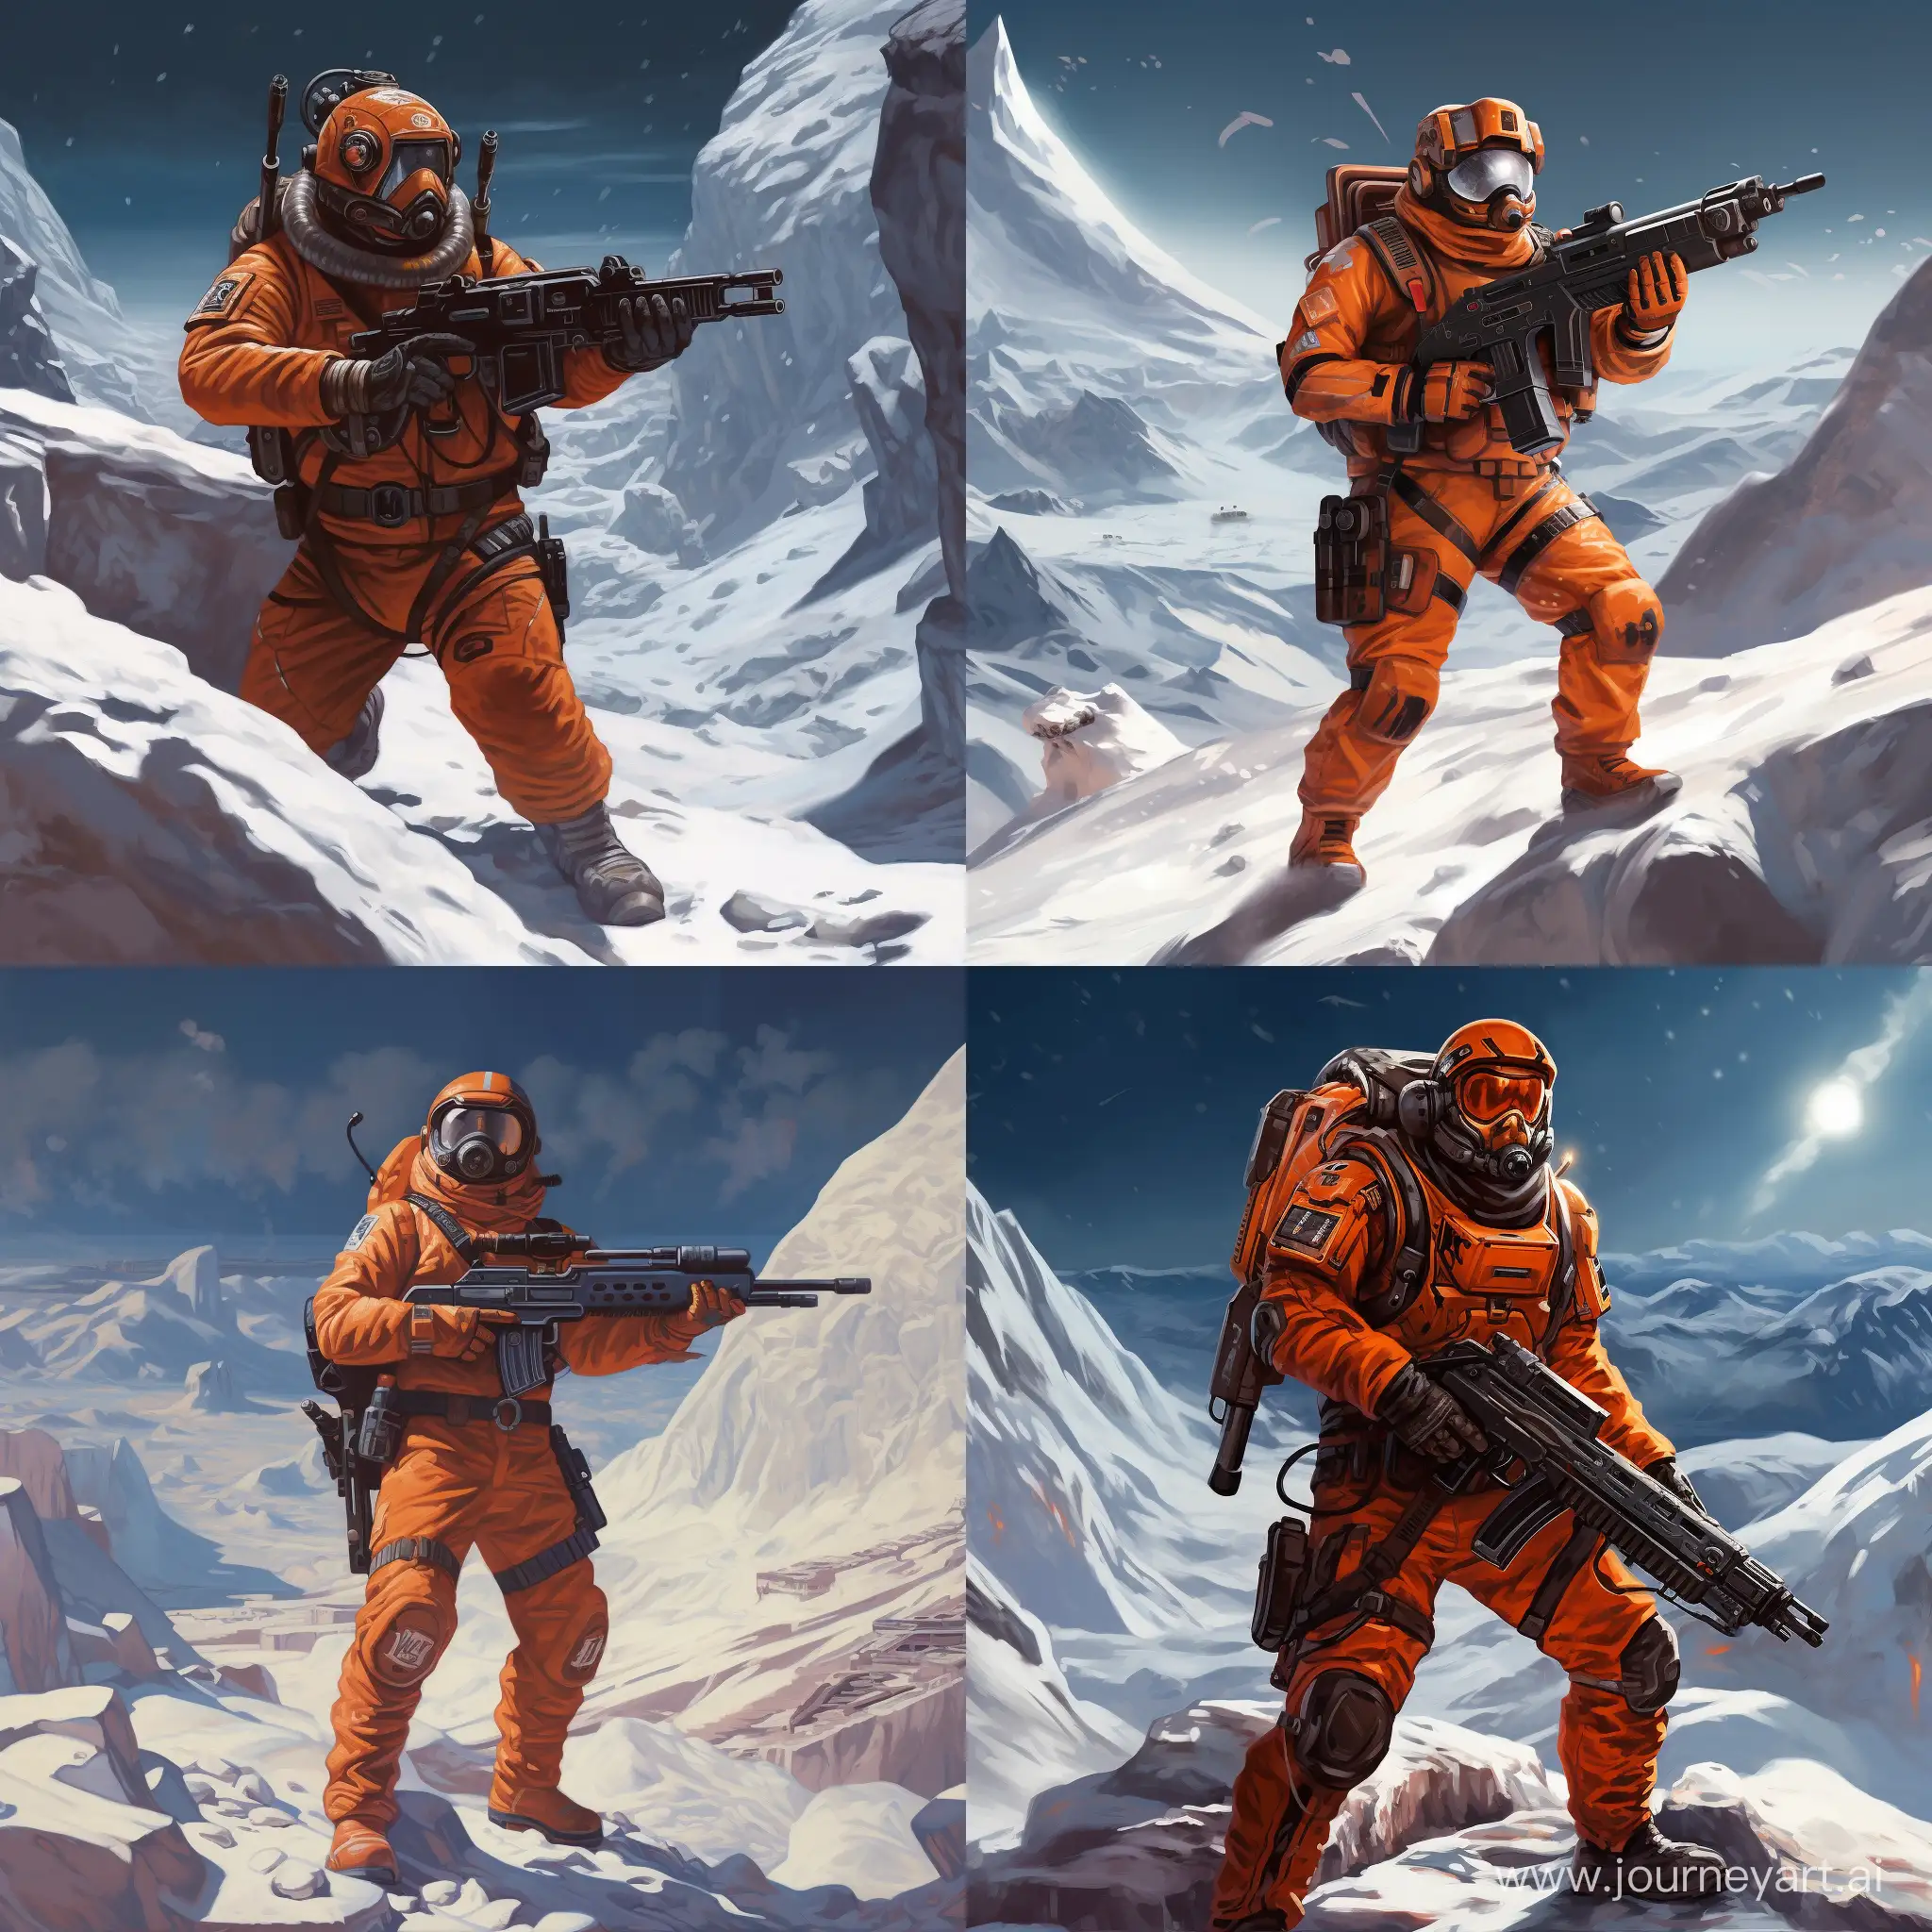 SciFi-Astronaut-in-Orange-Dark-Fantasy-Spacesuit-Confronts-Snowy-Peril